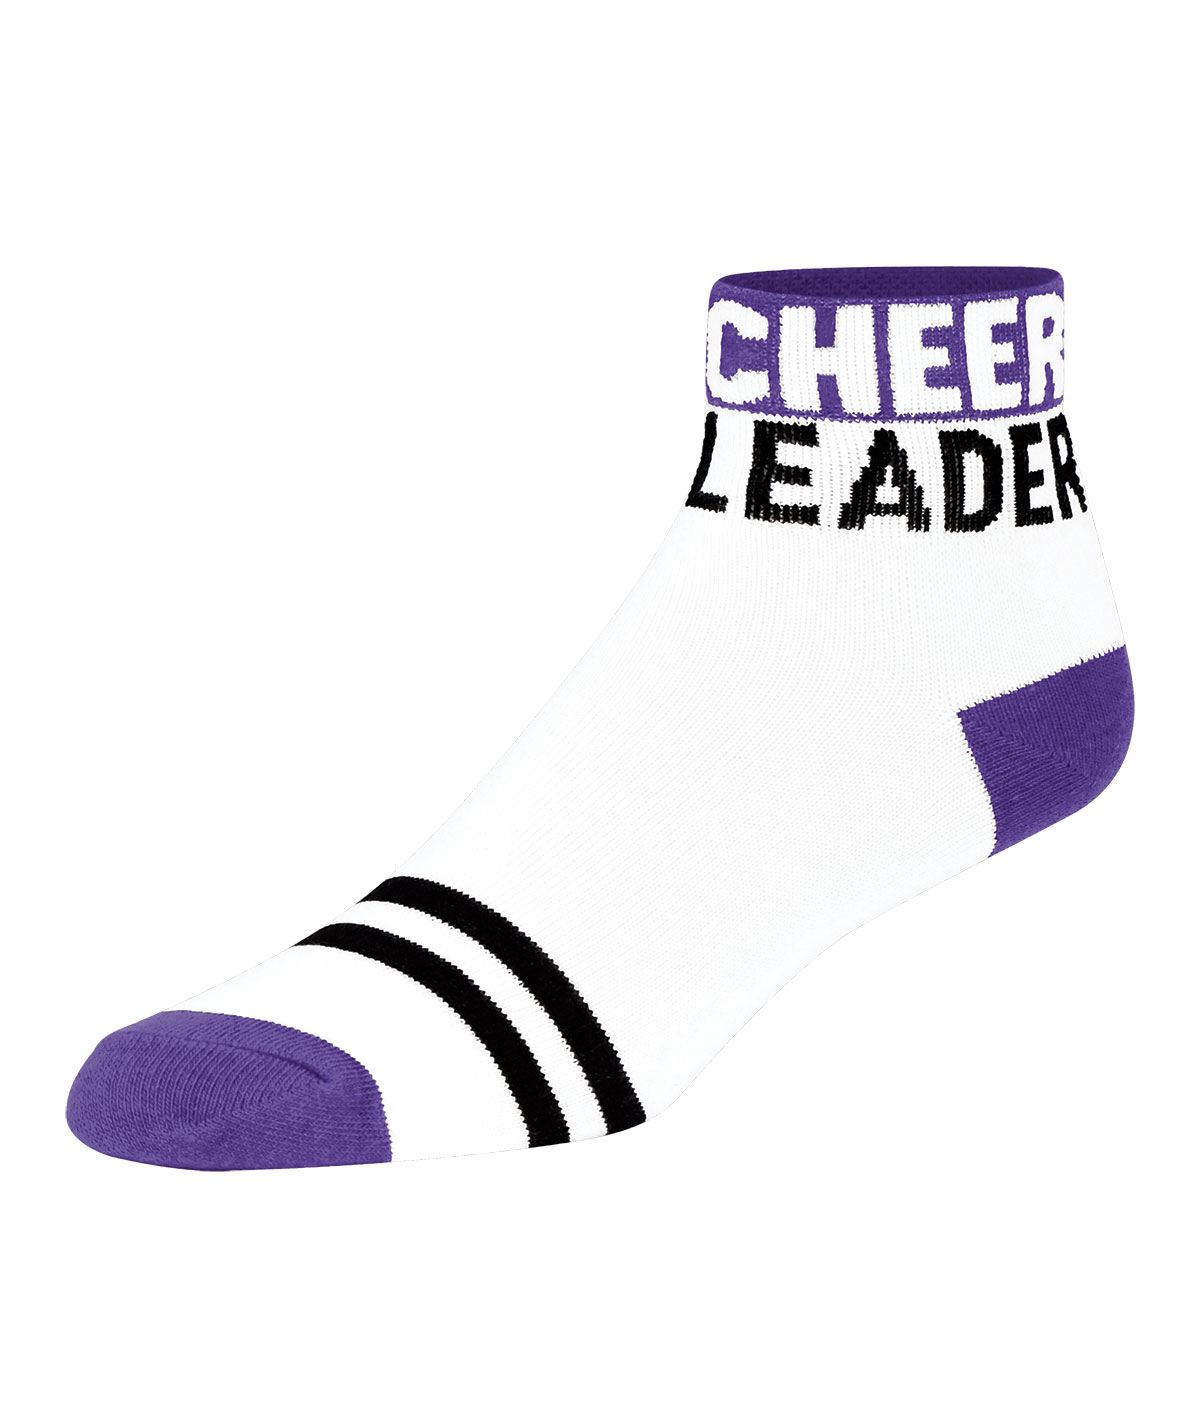 Chasse Cheerleader For Life Sock